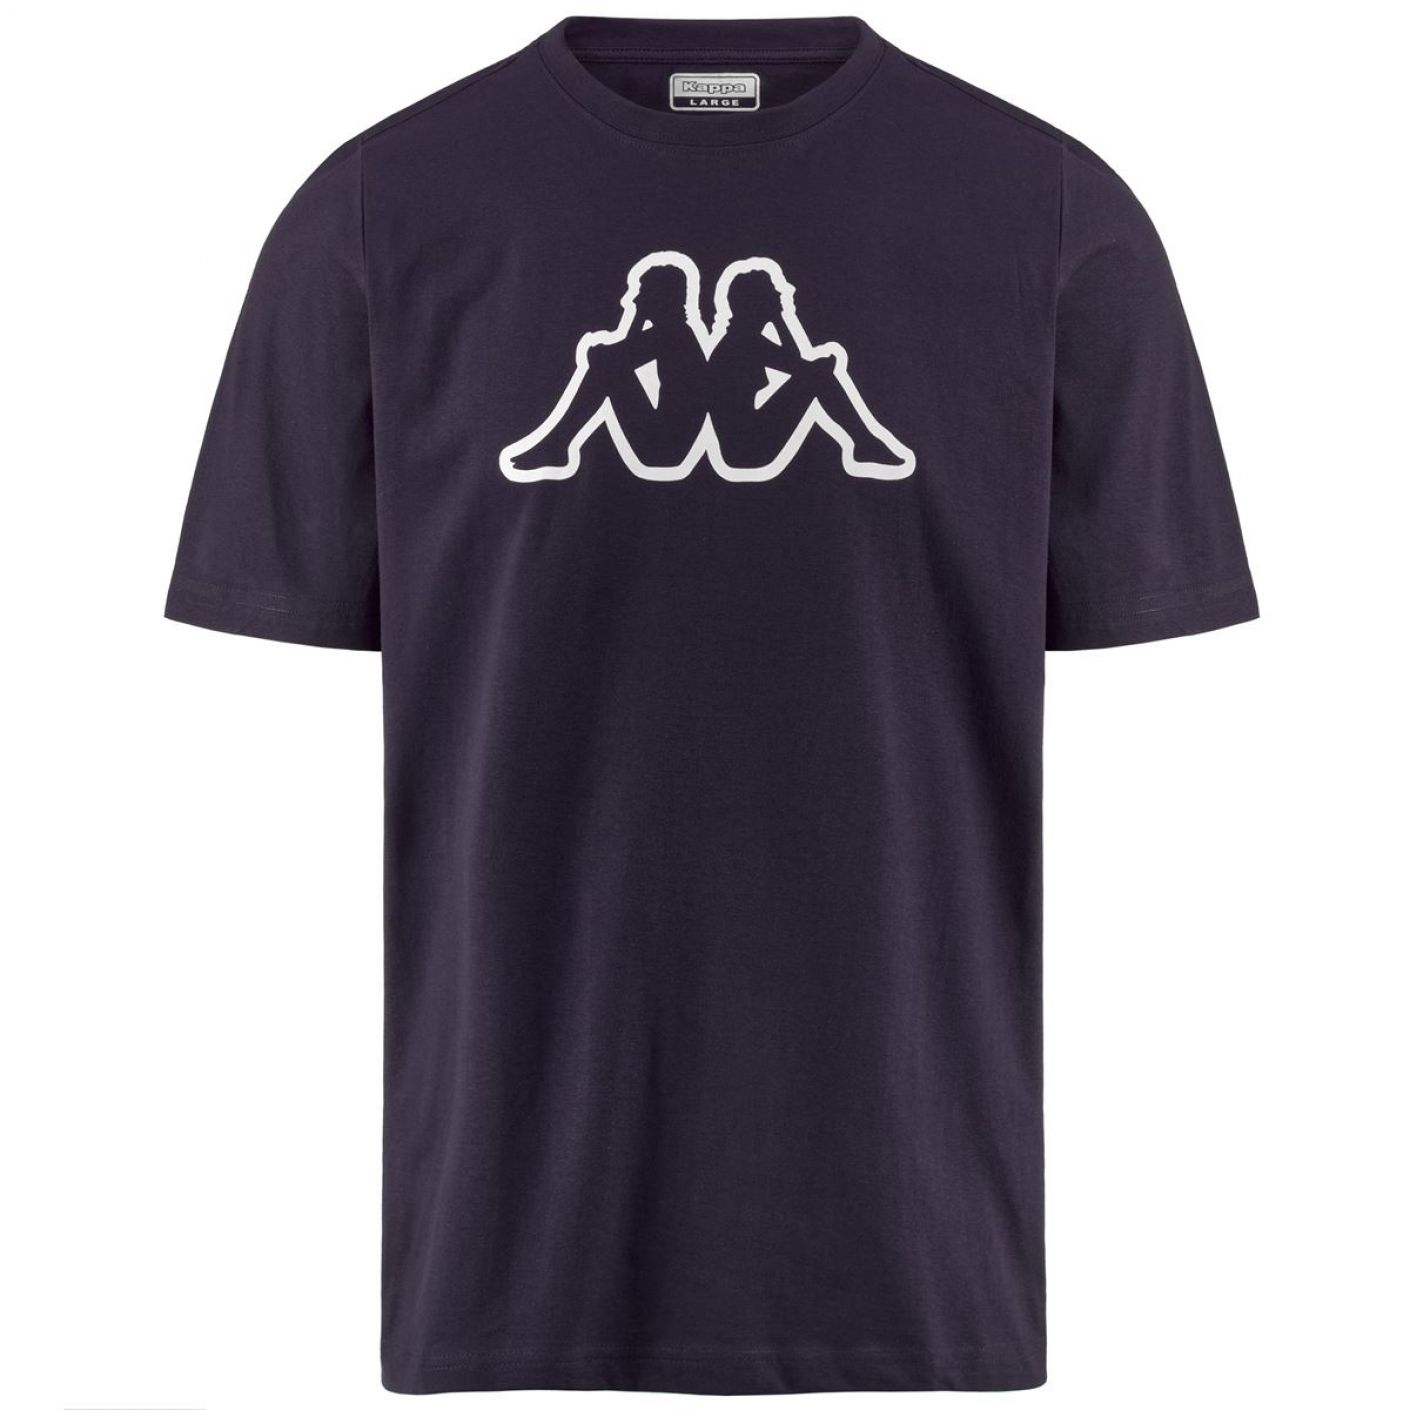 Kappa T-Shirt Logo Cromen Blu mare